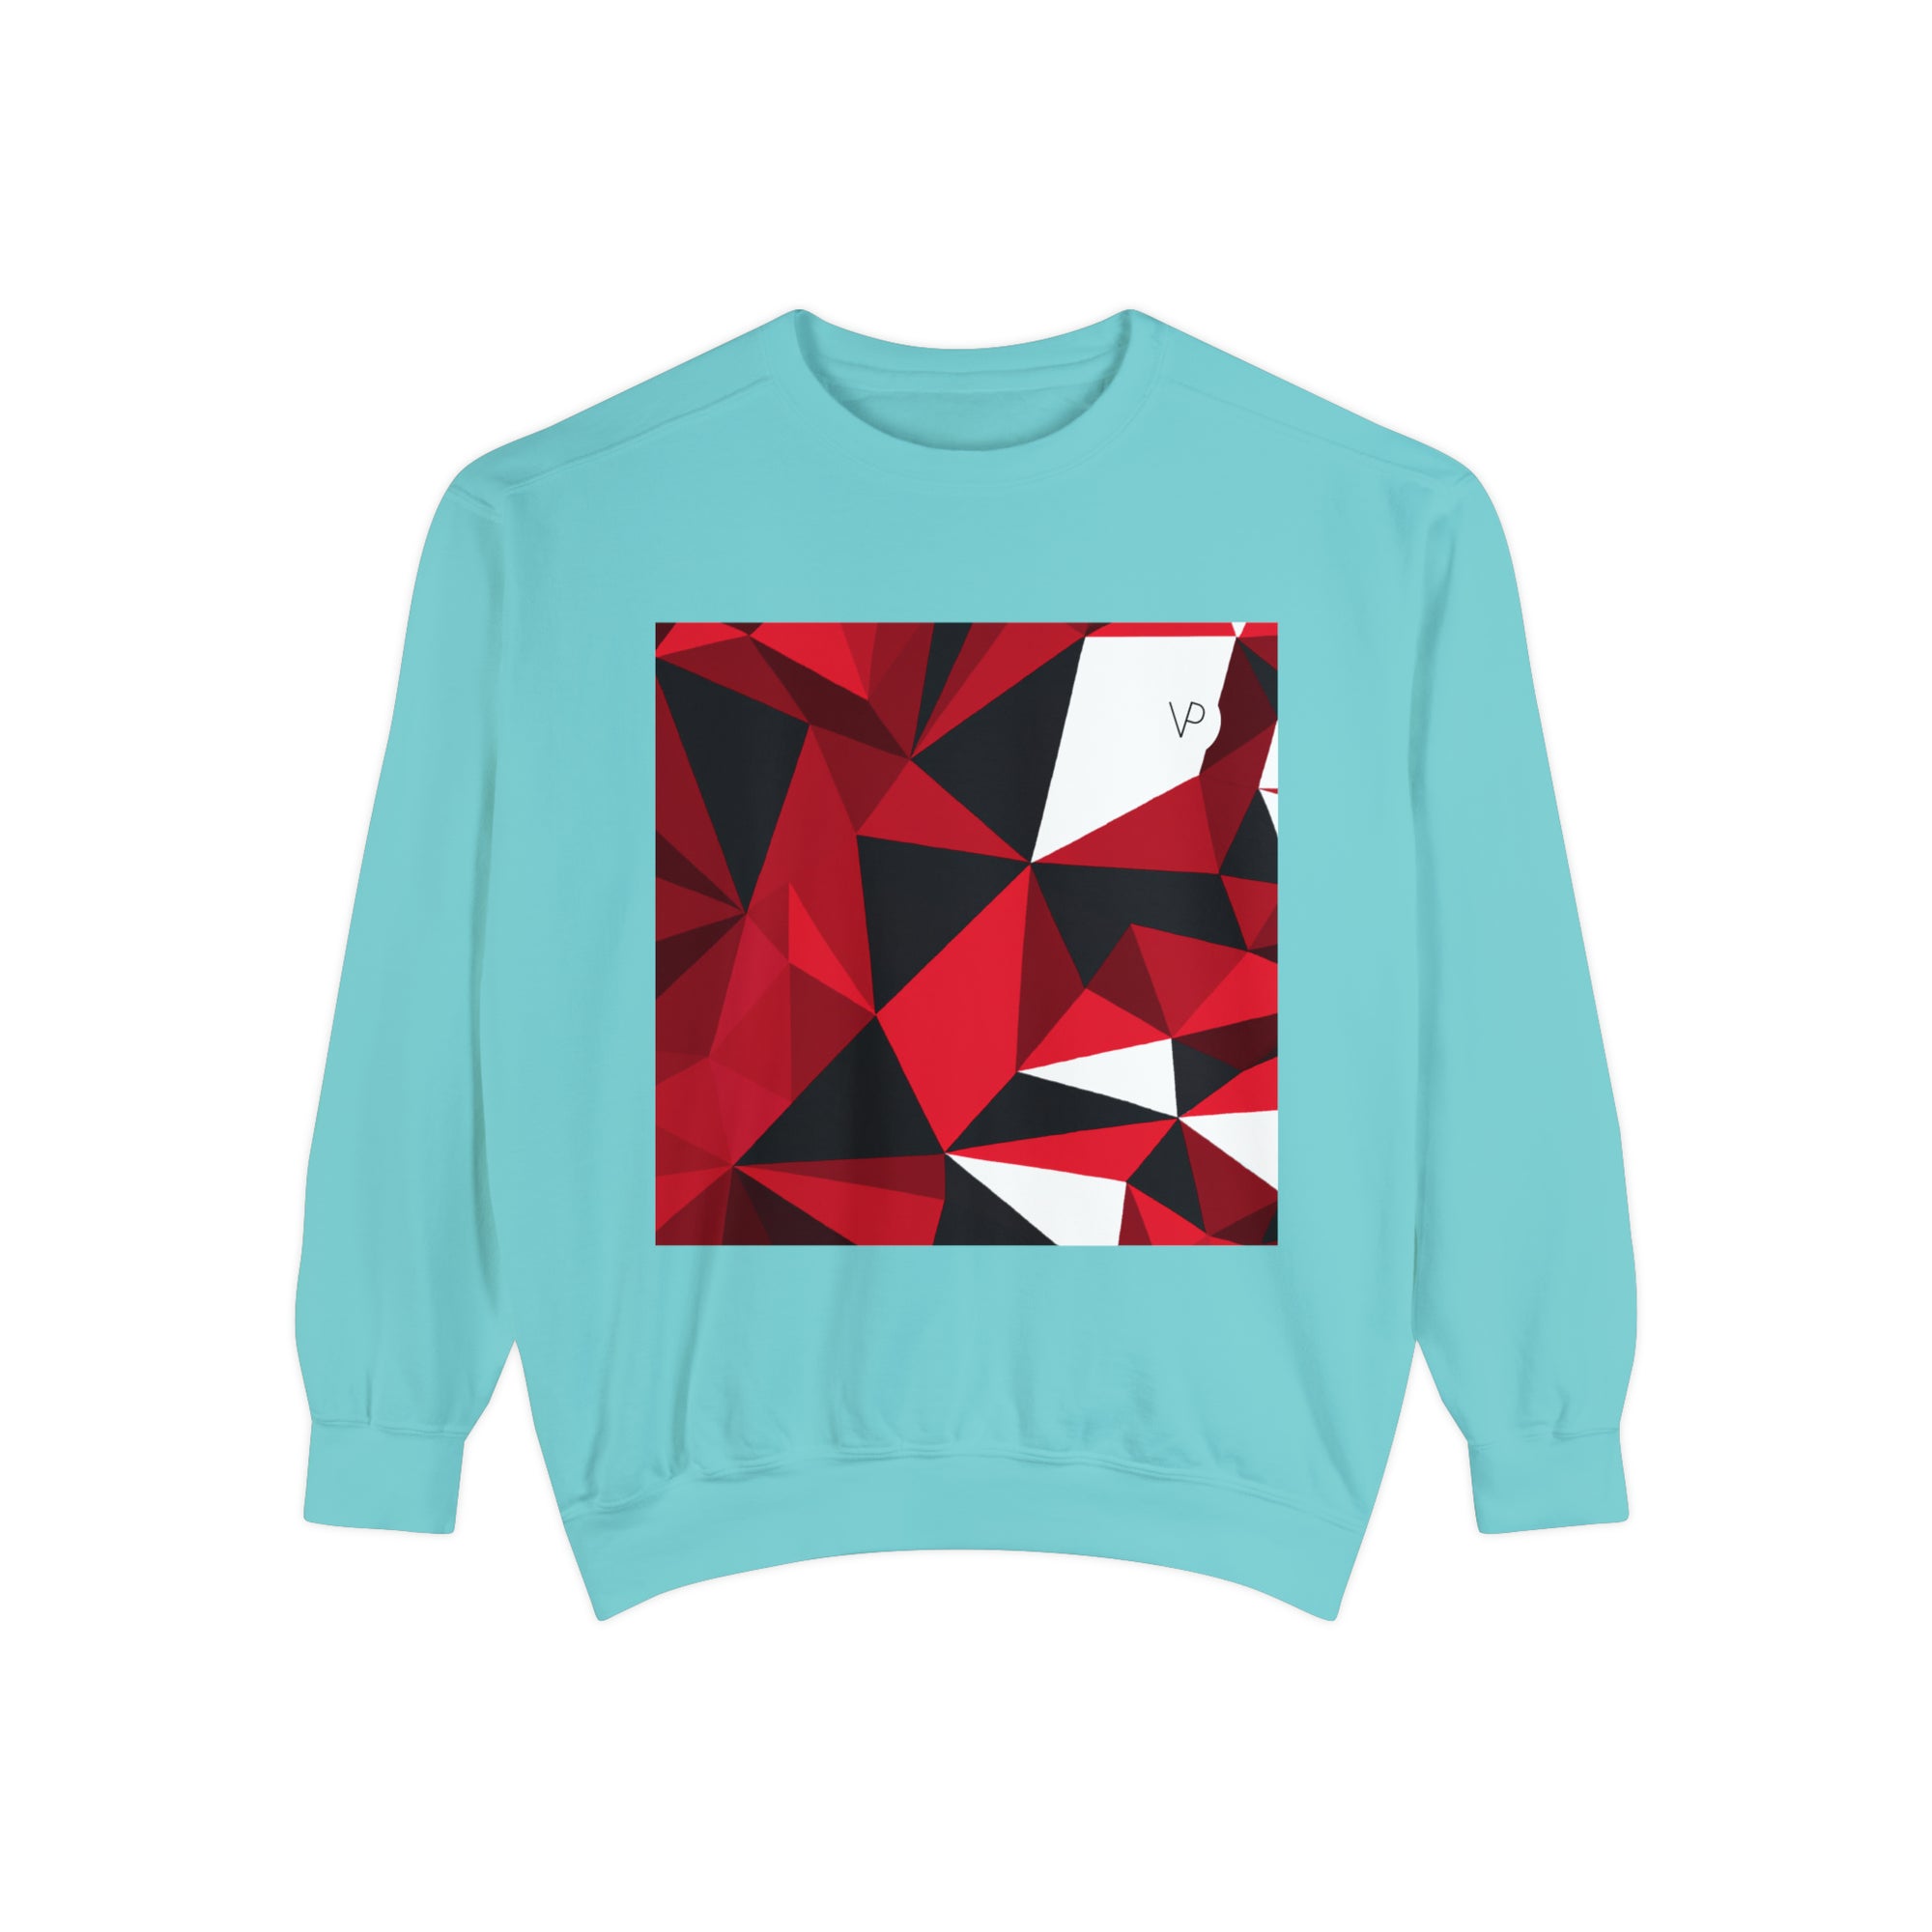 "Dream Big" - Sweatshirt Garment-Dyed